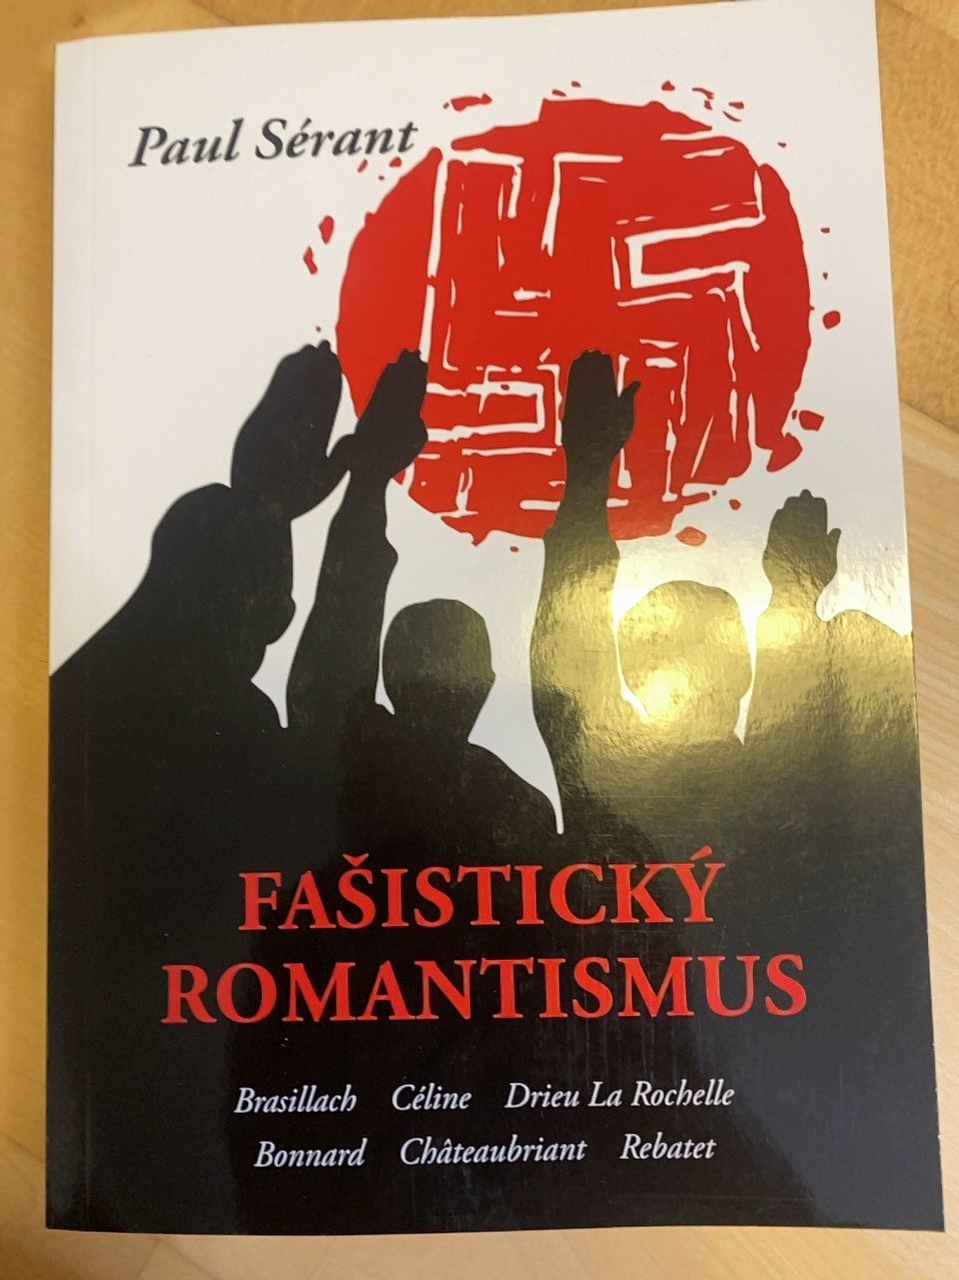 Kniha “fašistický romantismus” Staré město Paul Serant